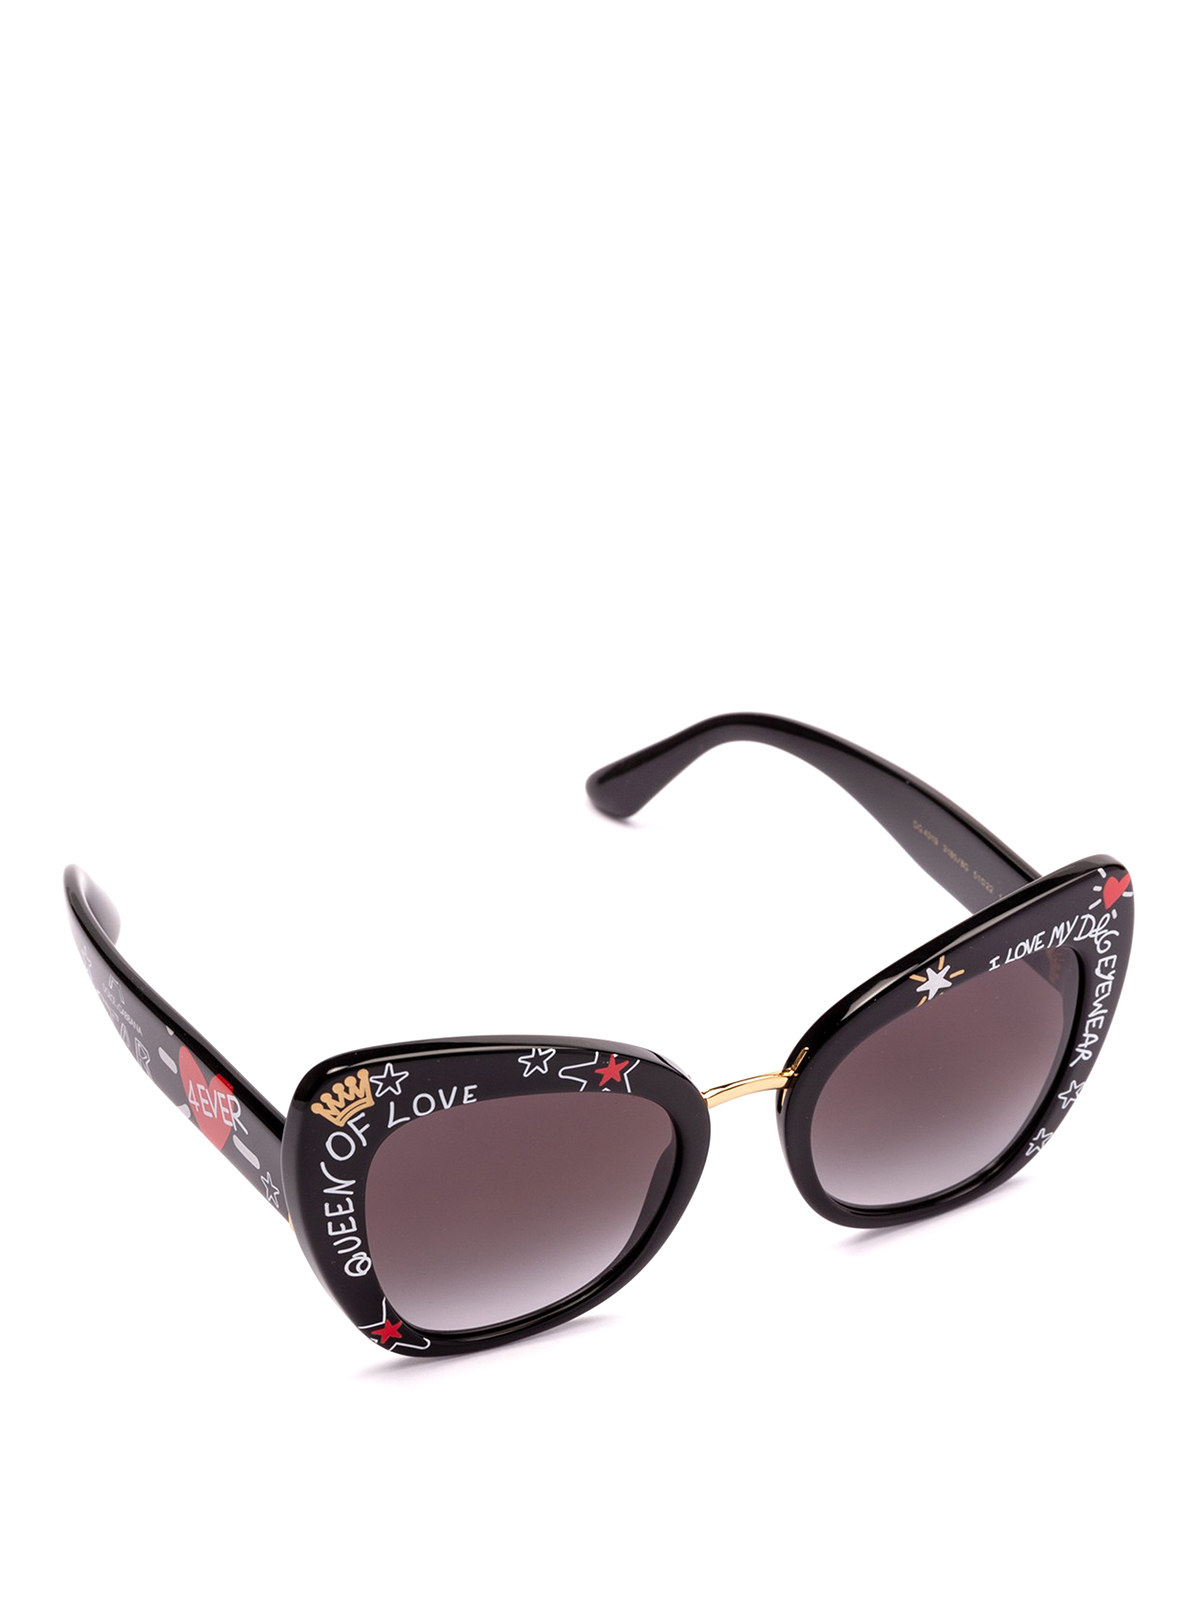 dolce and gabbana graffiti sunglasses